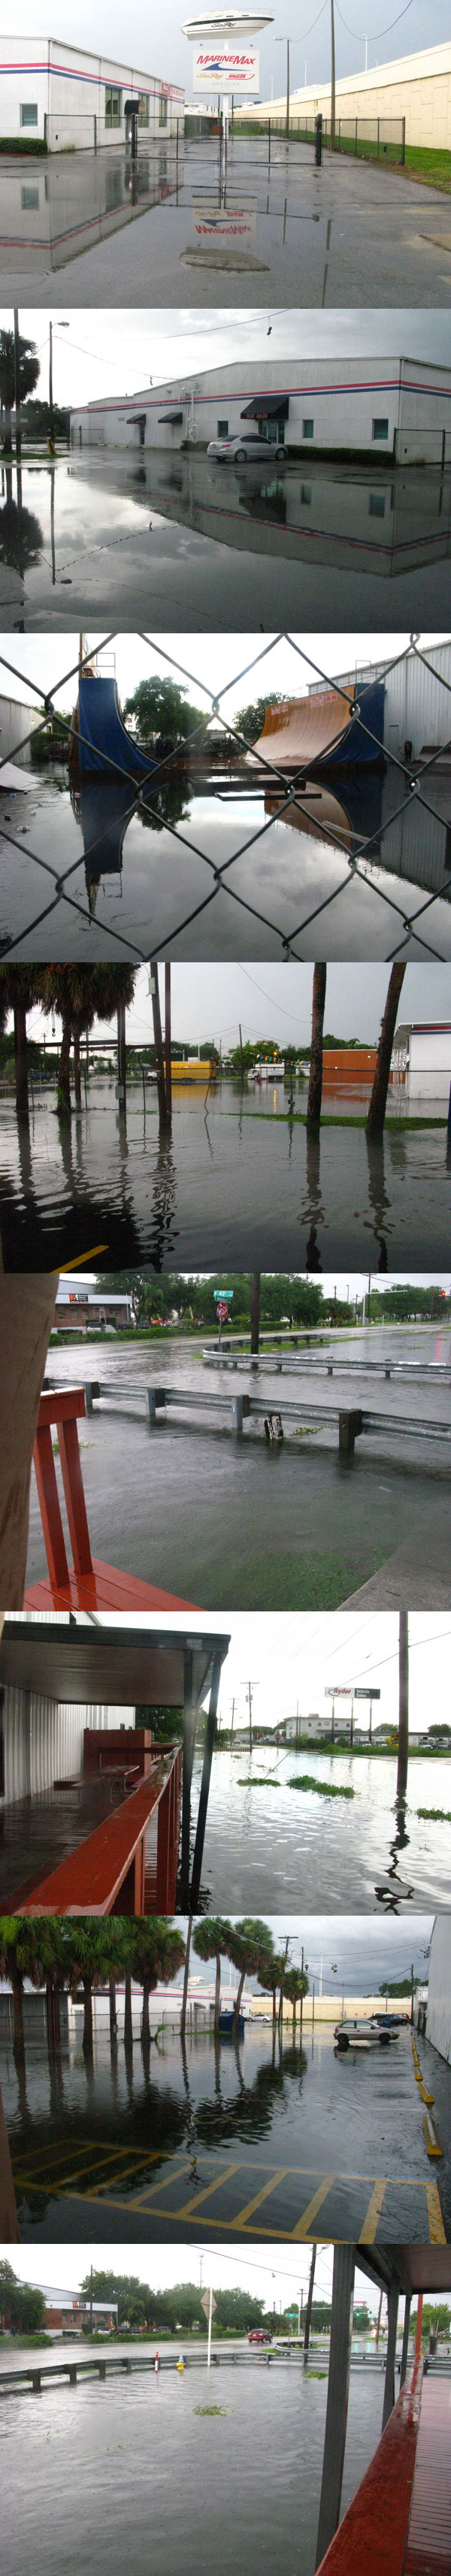 Flooding at Skatepark of Tampa